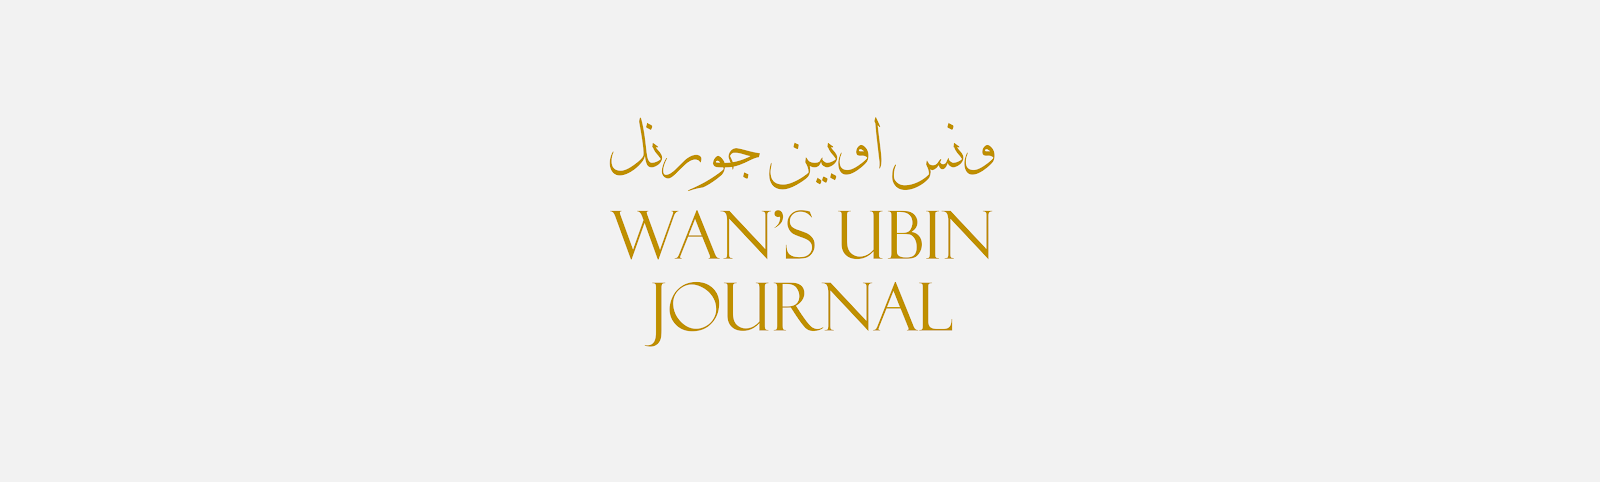 Wan's Ubin Journal